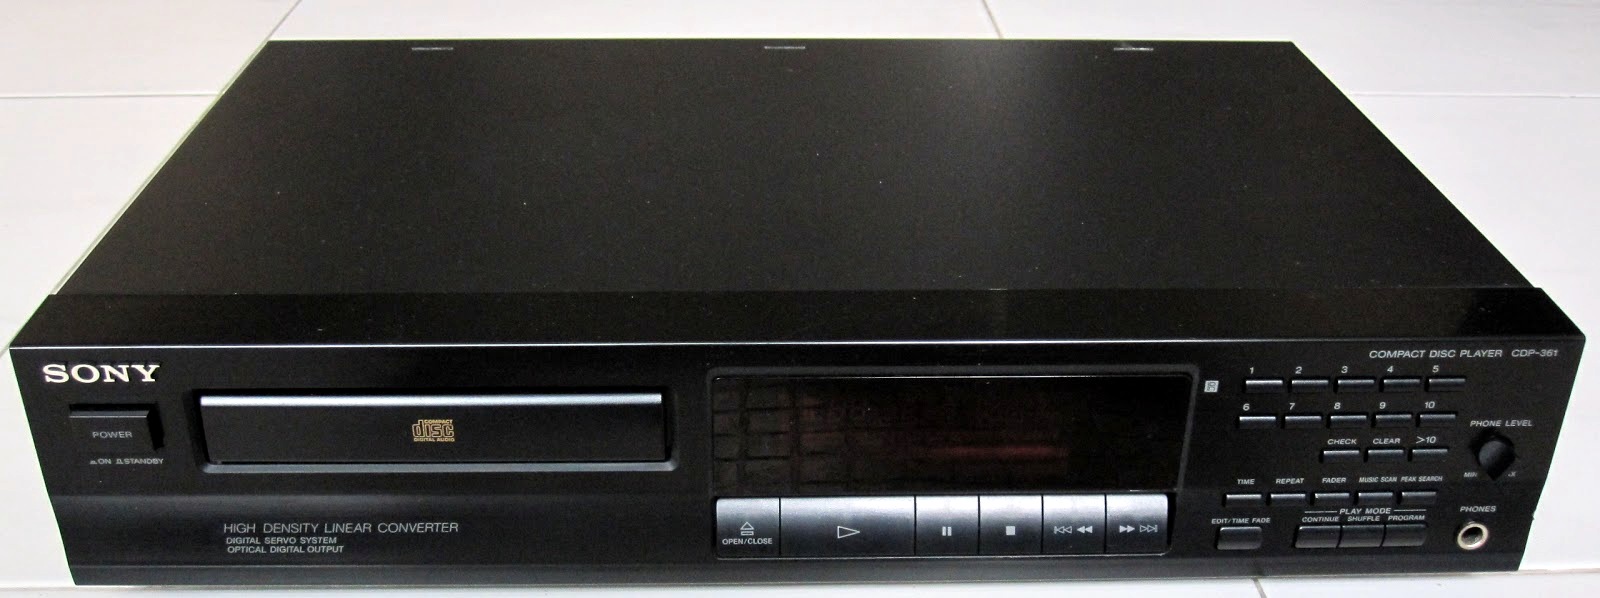 Sony CDP-361-1995.jpg